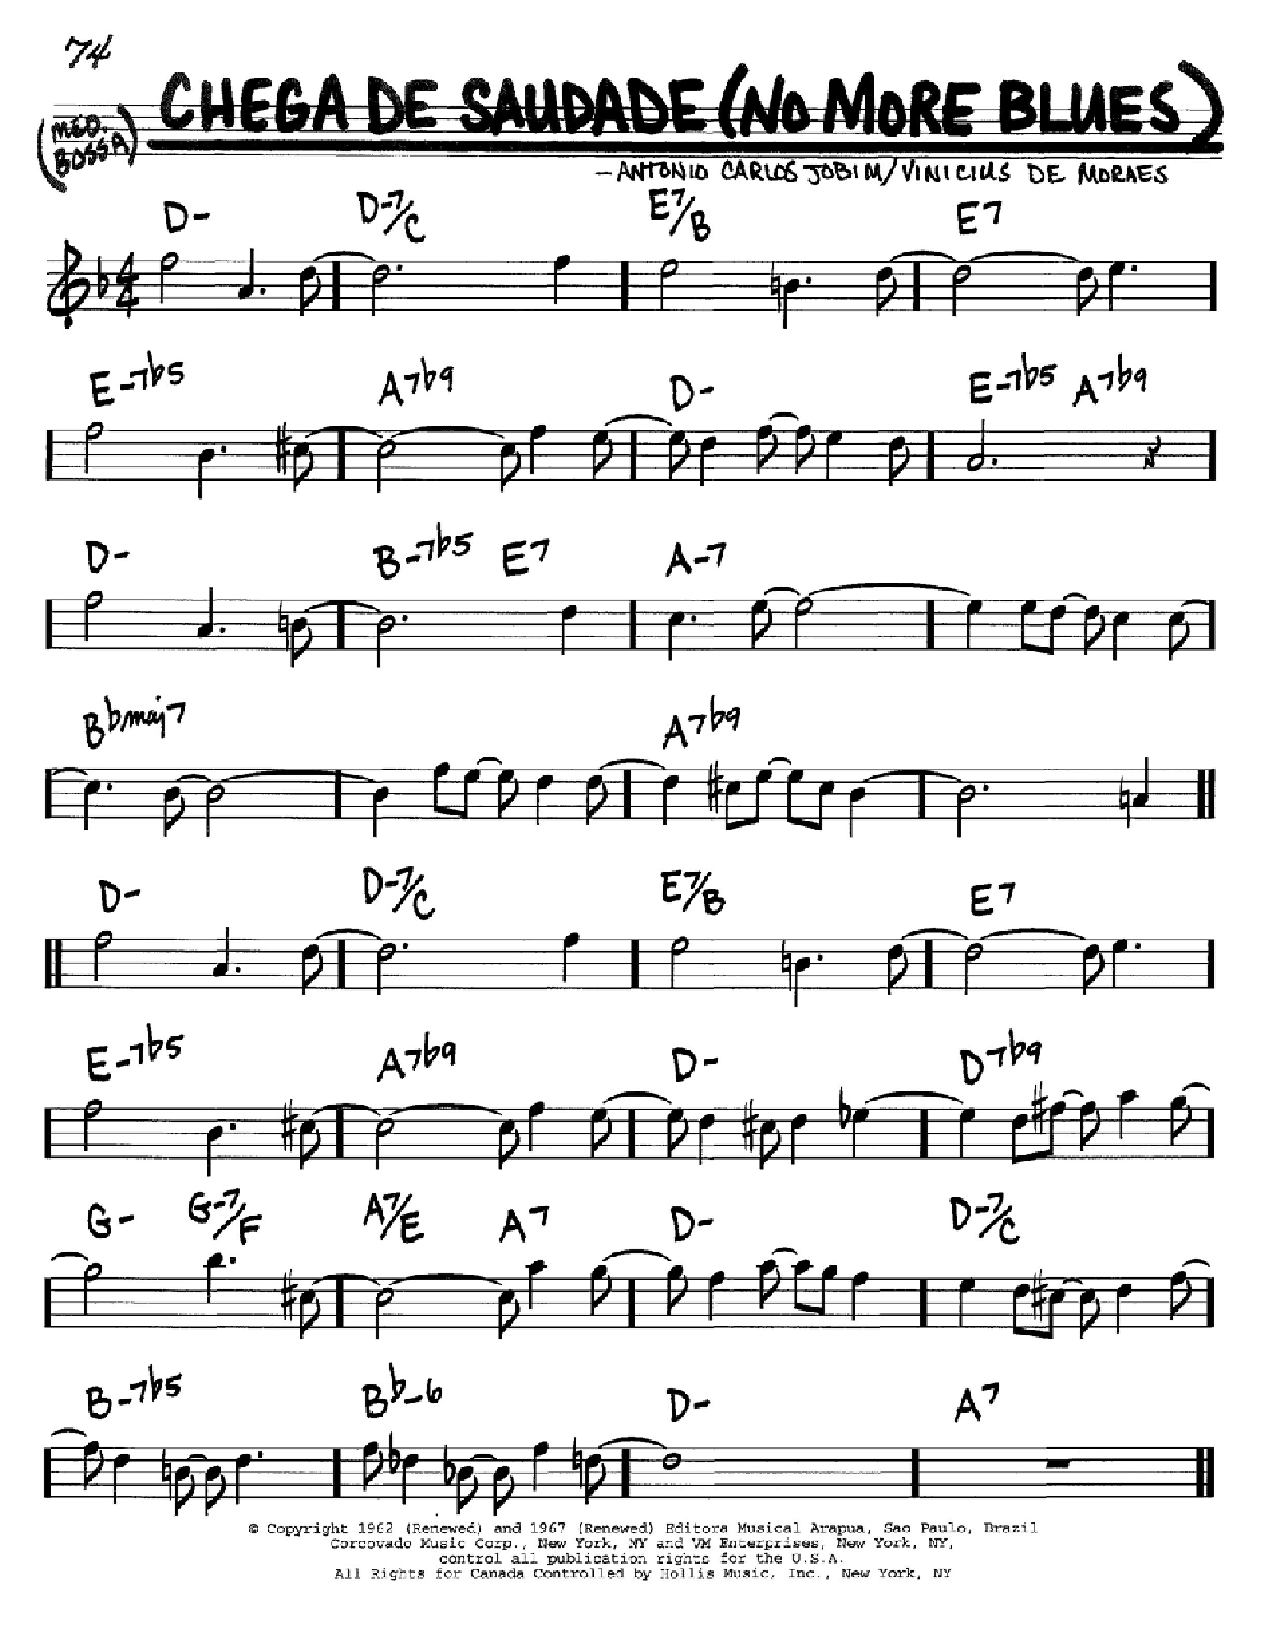 Antonio Carlos Jobim Chega De Saudade (No More Blues) Sheet Music Notes & Chords for Real Book - Melody & Chords - Bb Instruments - Download or Print PDF